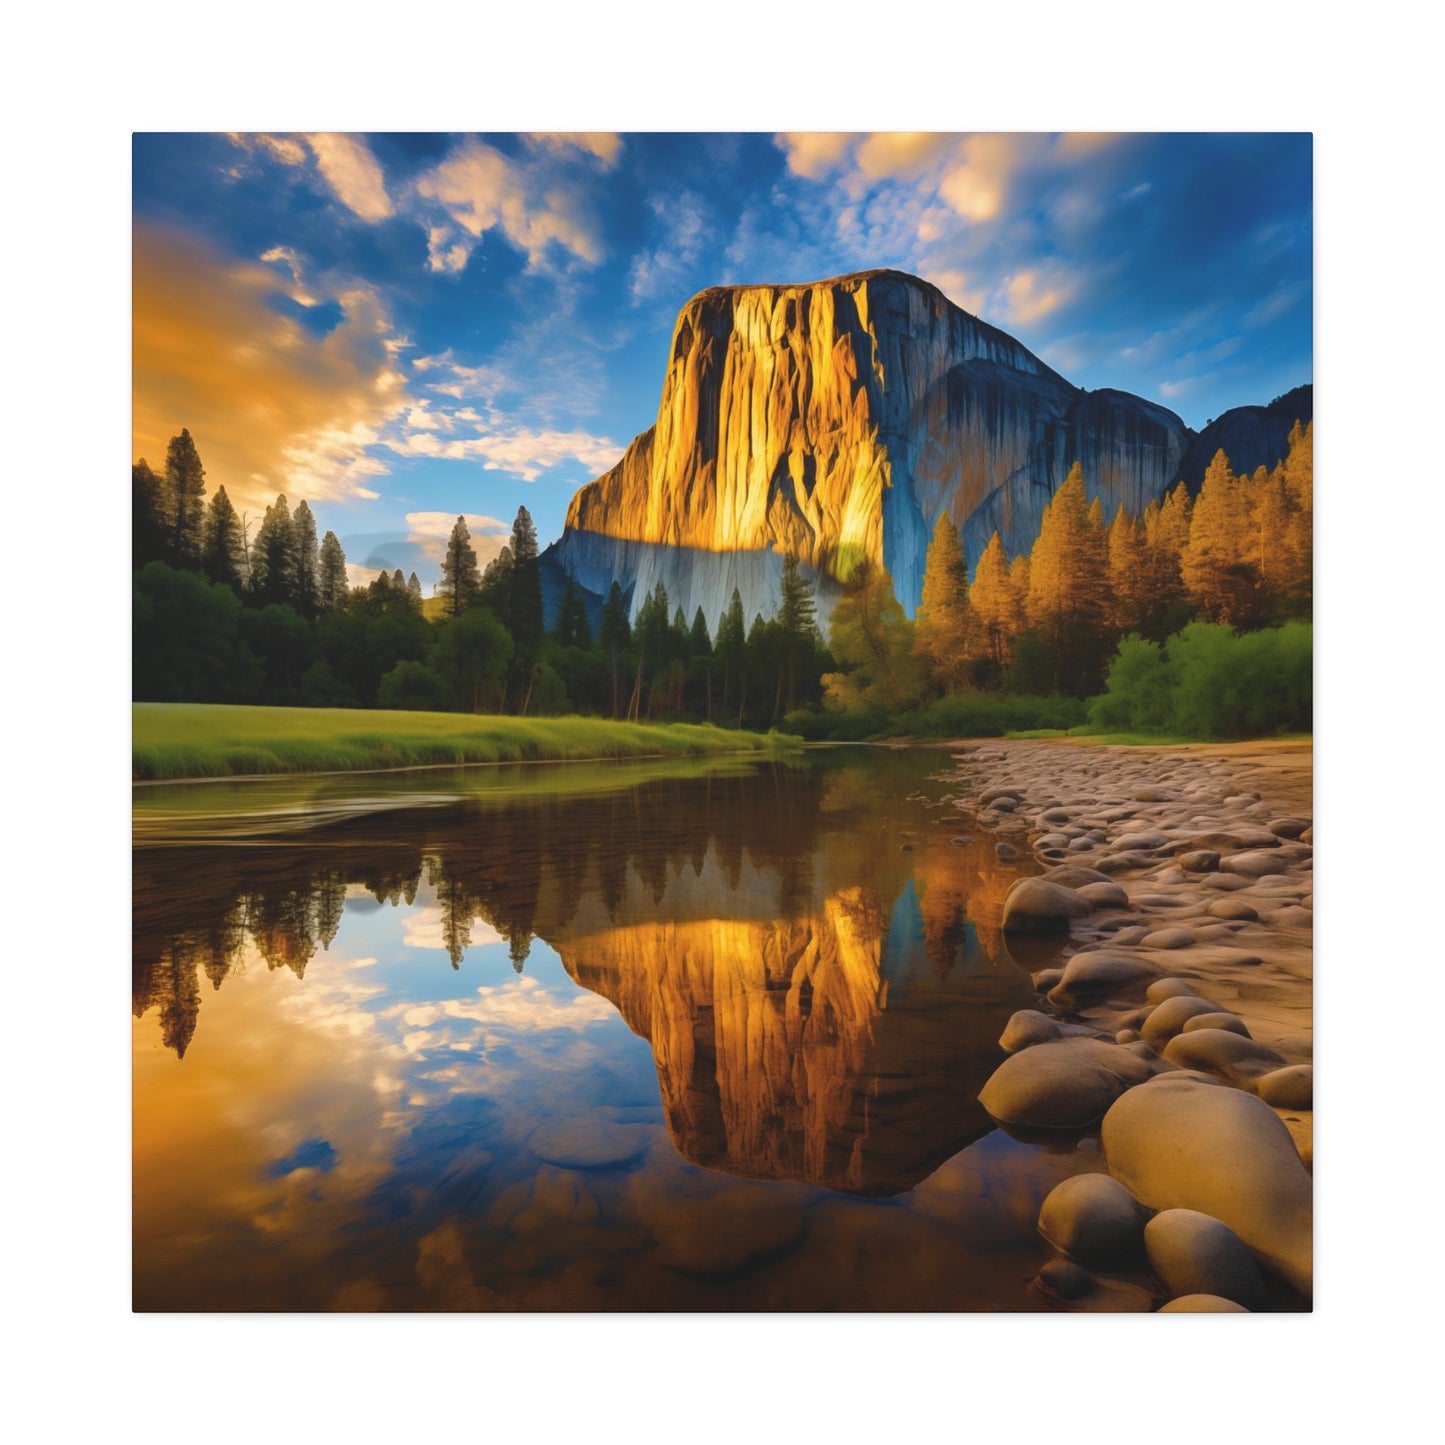 Yosemite National Park wall decor